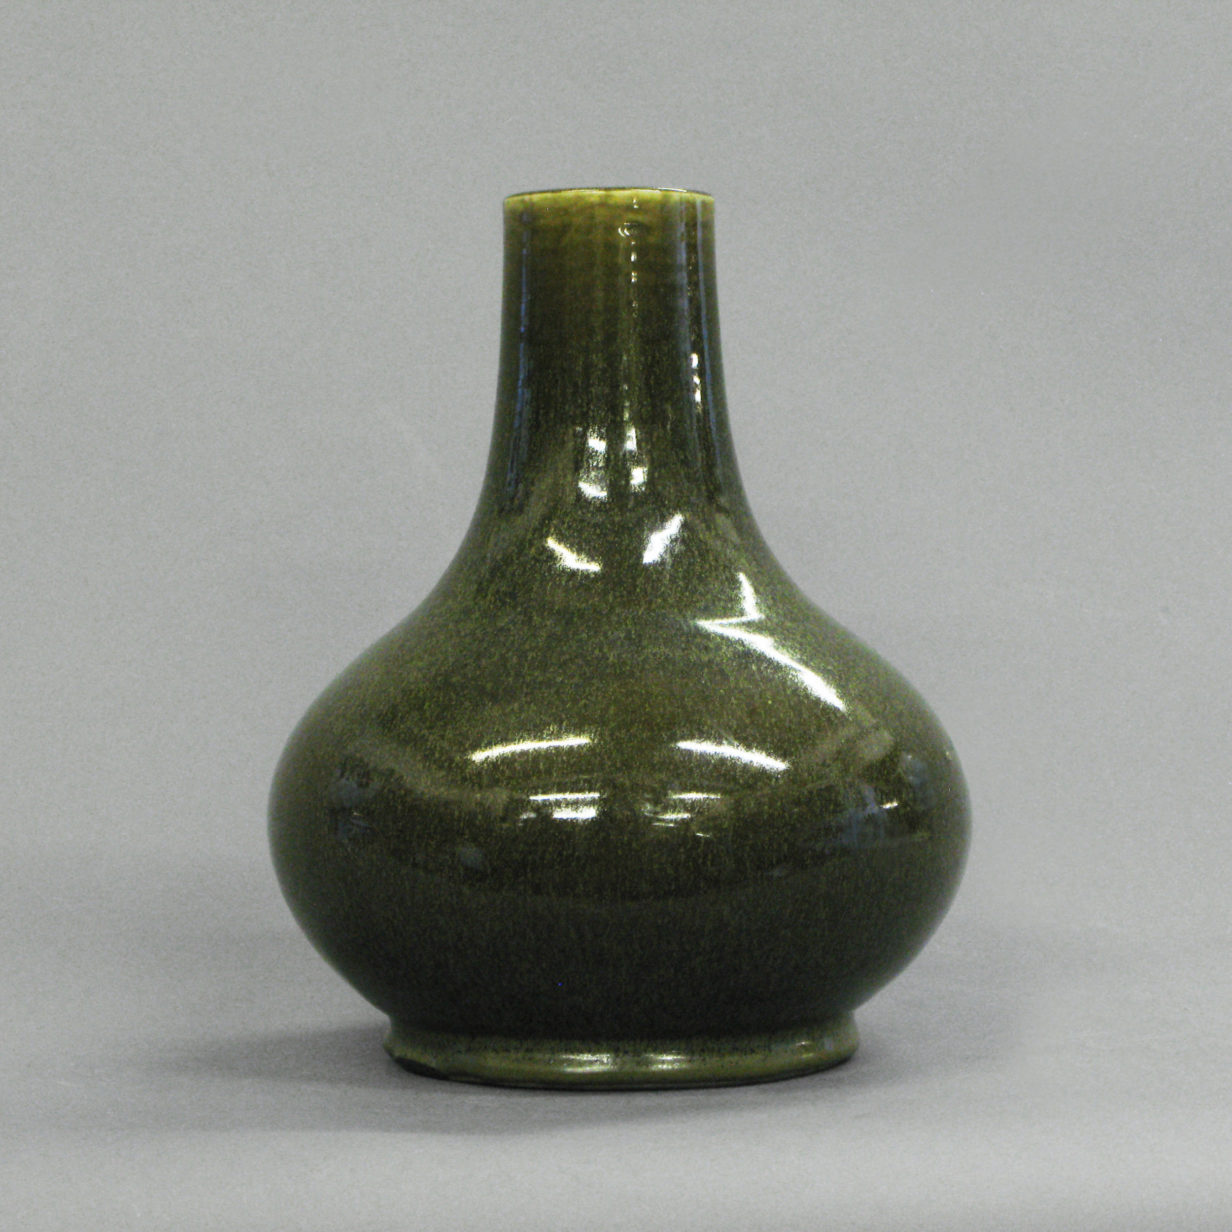 A qing dynasty teadust glaze bottle vase